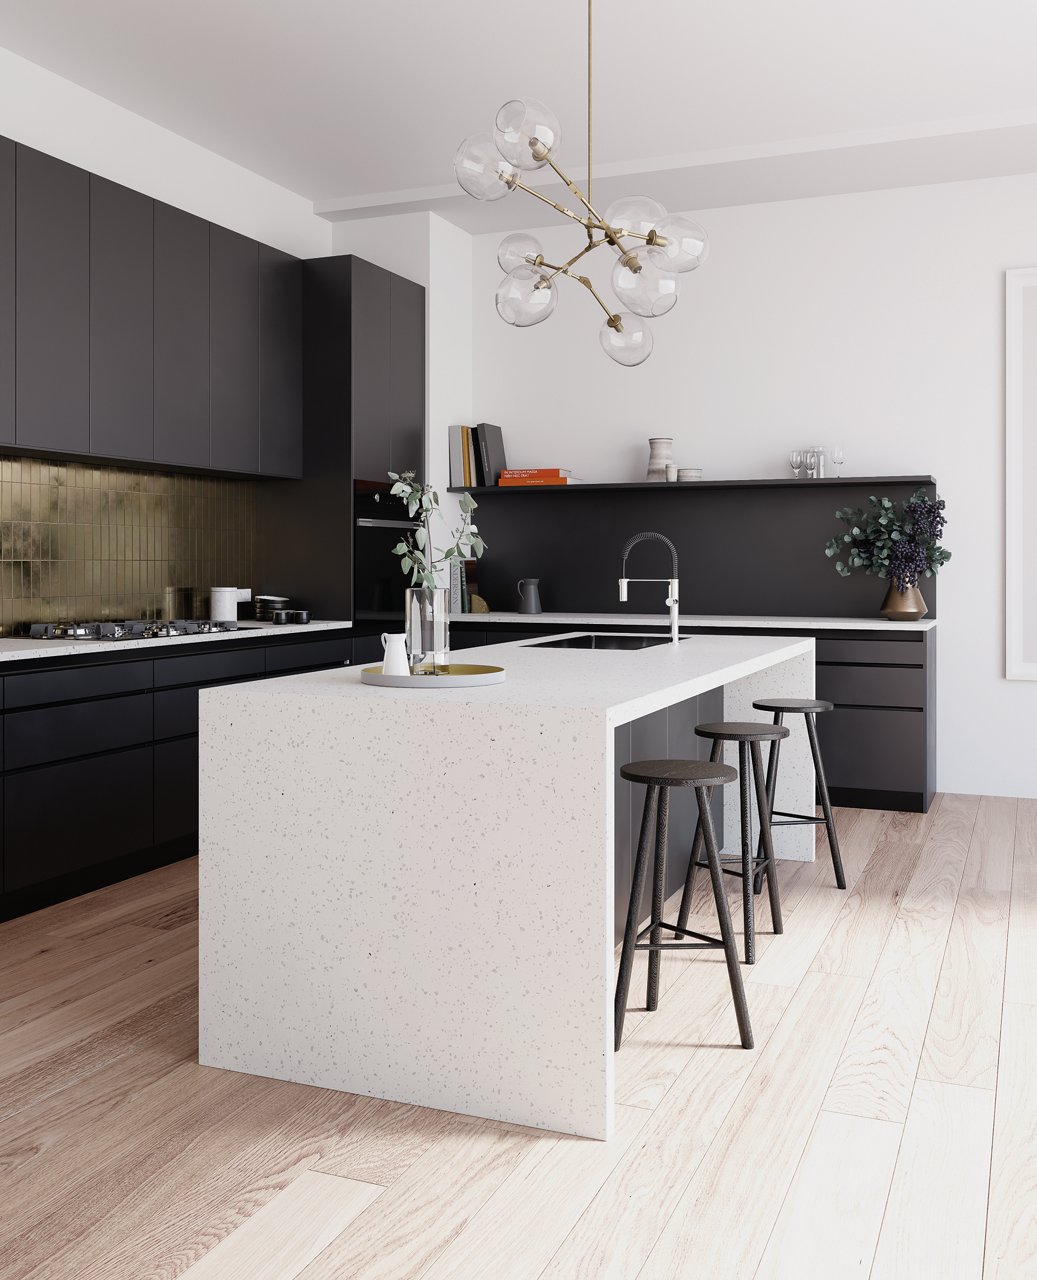 A kitchen with dark wood cabinets and Cambria Quartz Brittanicca waterfall edge kitchen island countertop and matching backsplash.